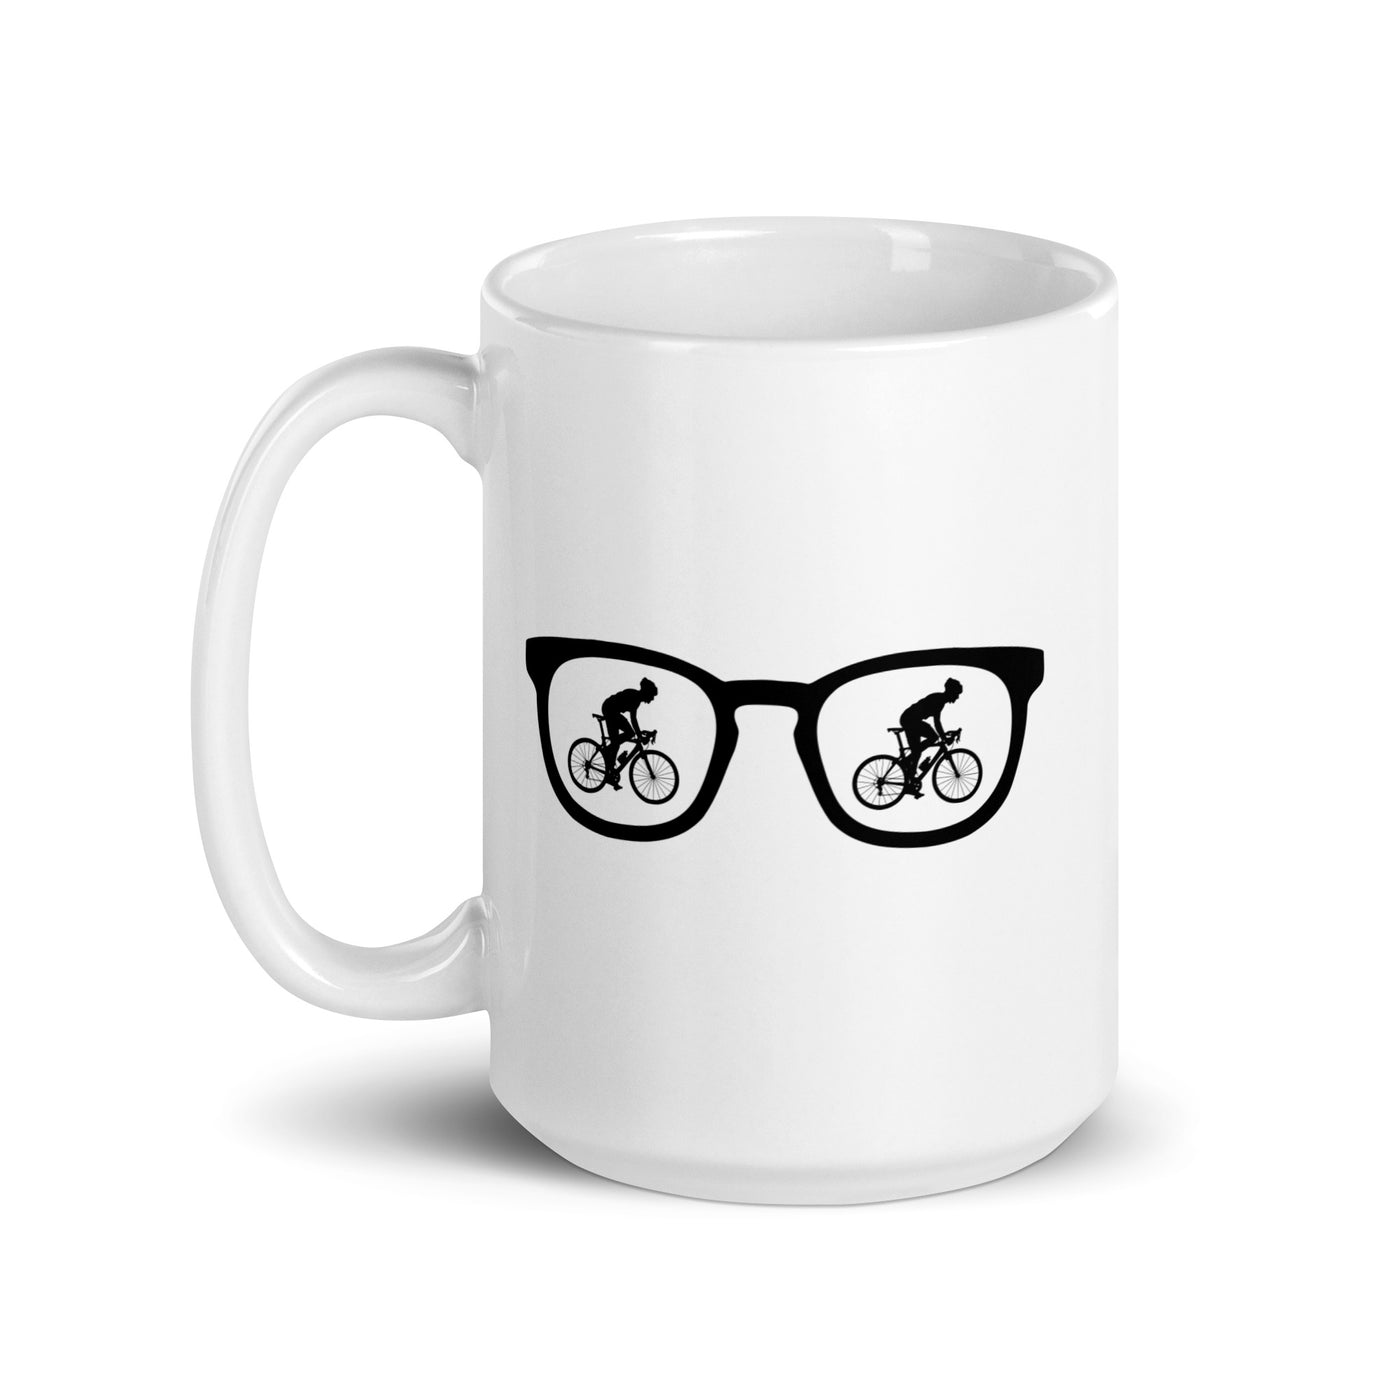 Sunglasses And Cycling 1 - Tasse fahrrad